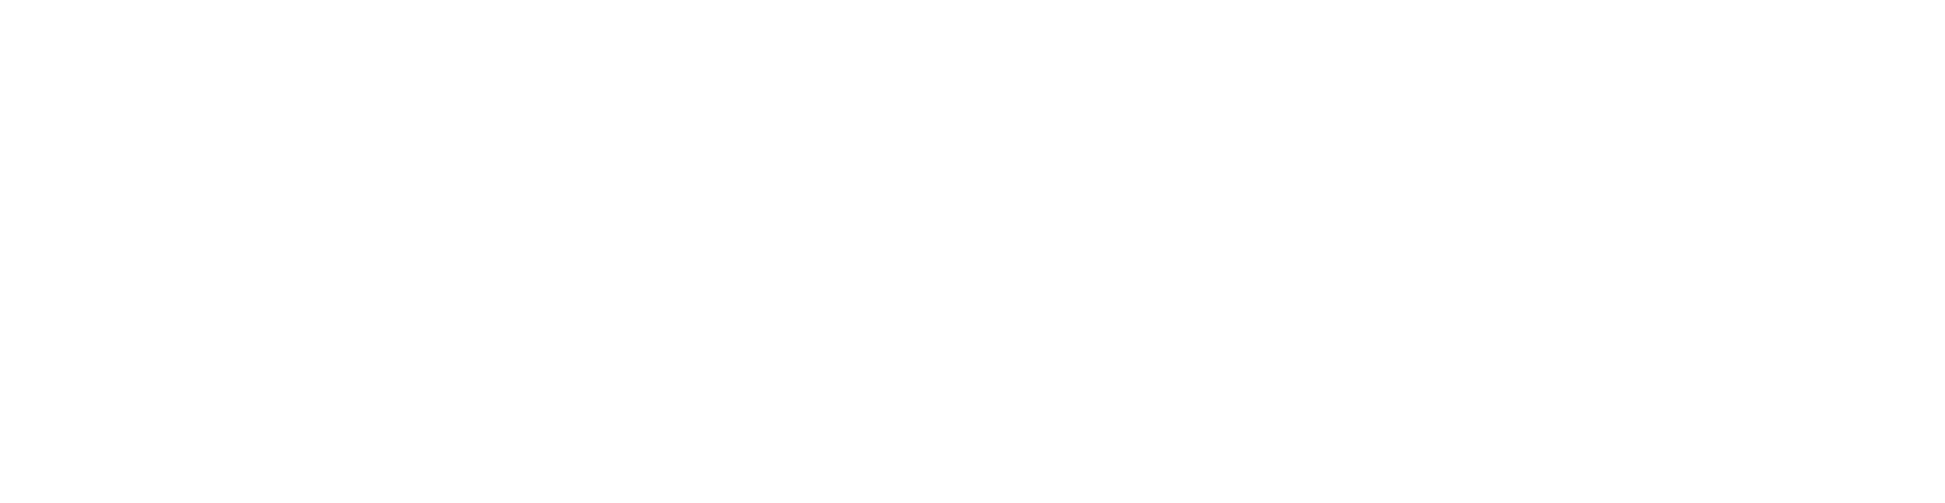 mtr triwest logo white